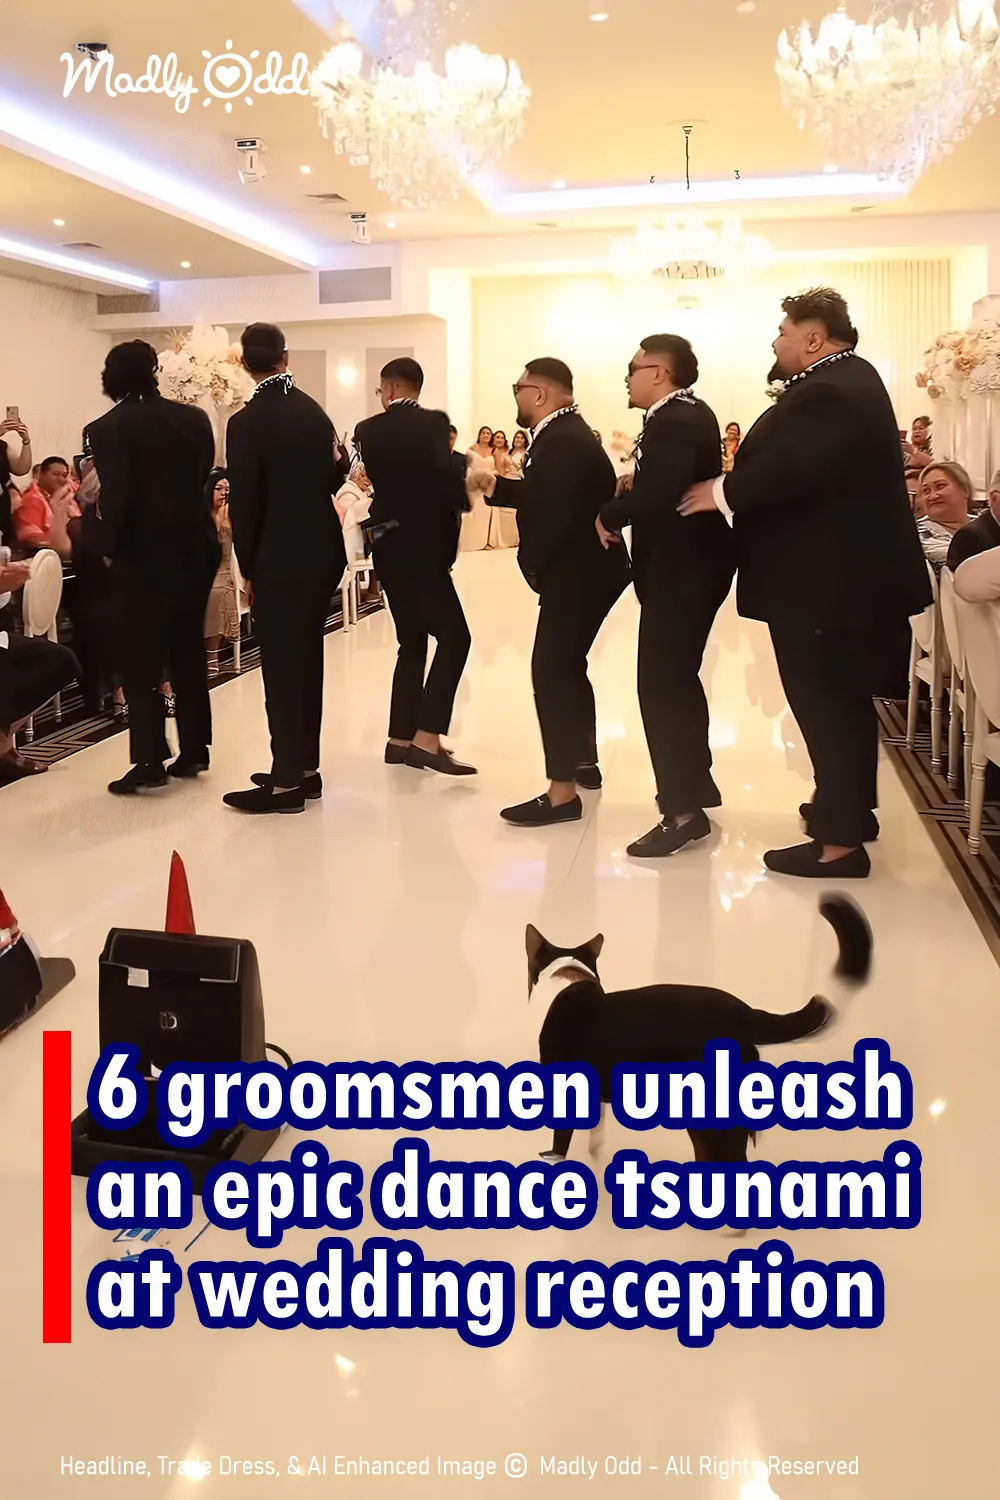 6 groomsmen unleash an epic dance tsunami at wedding reception